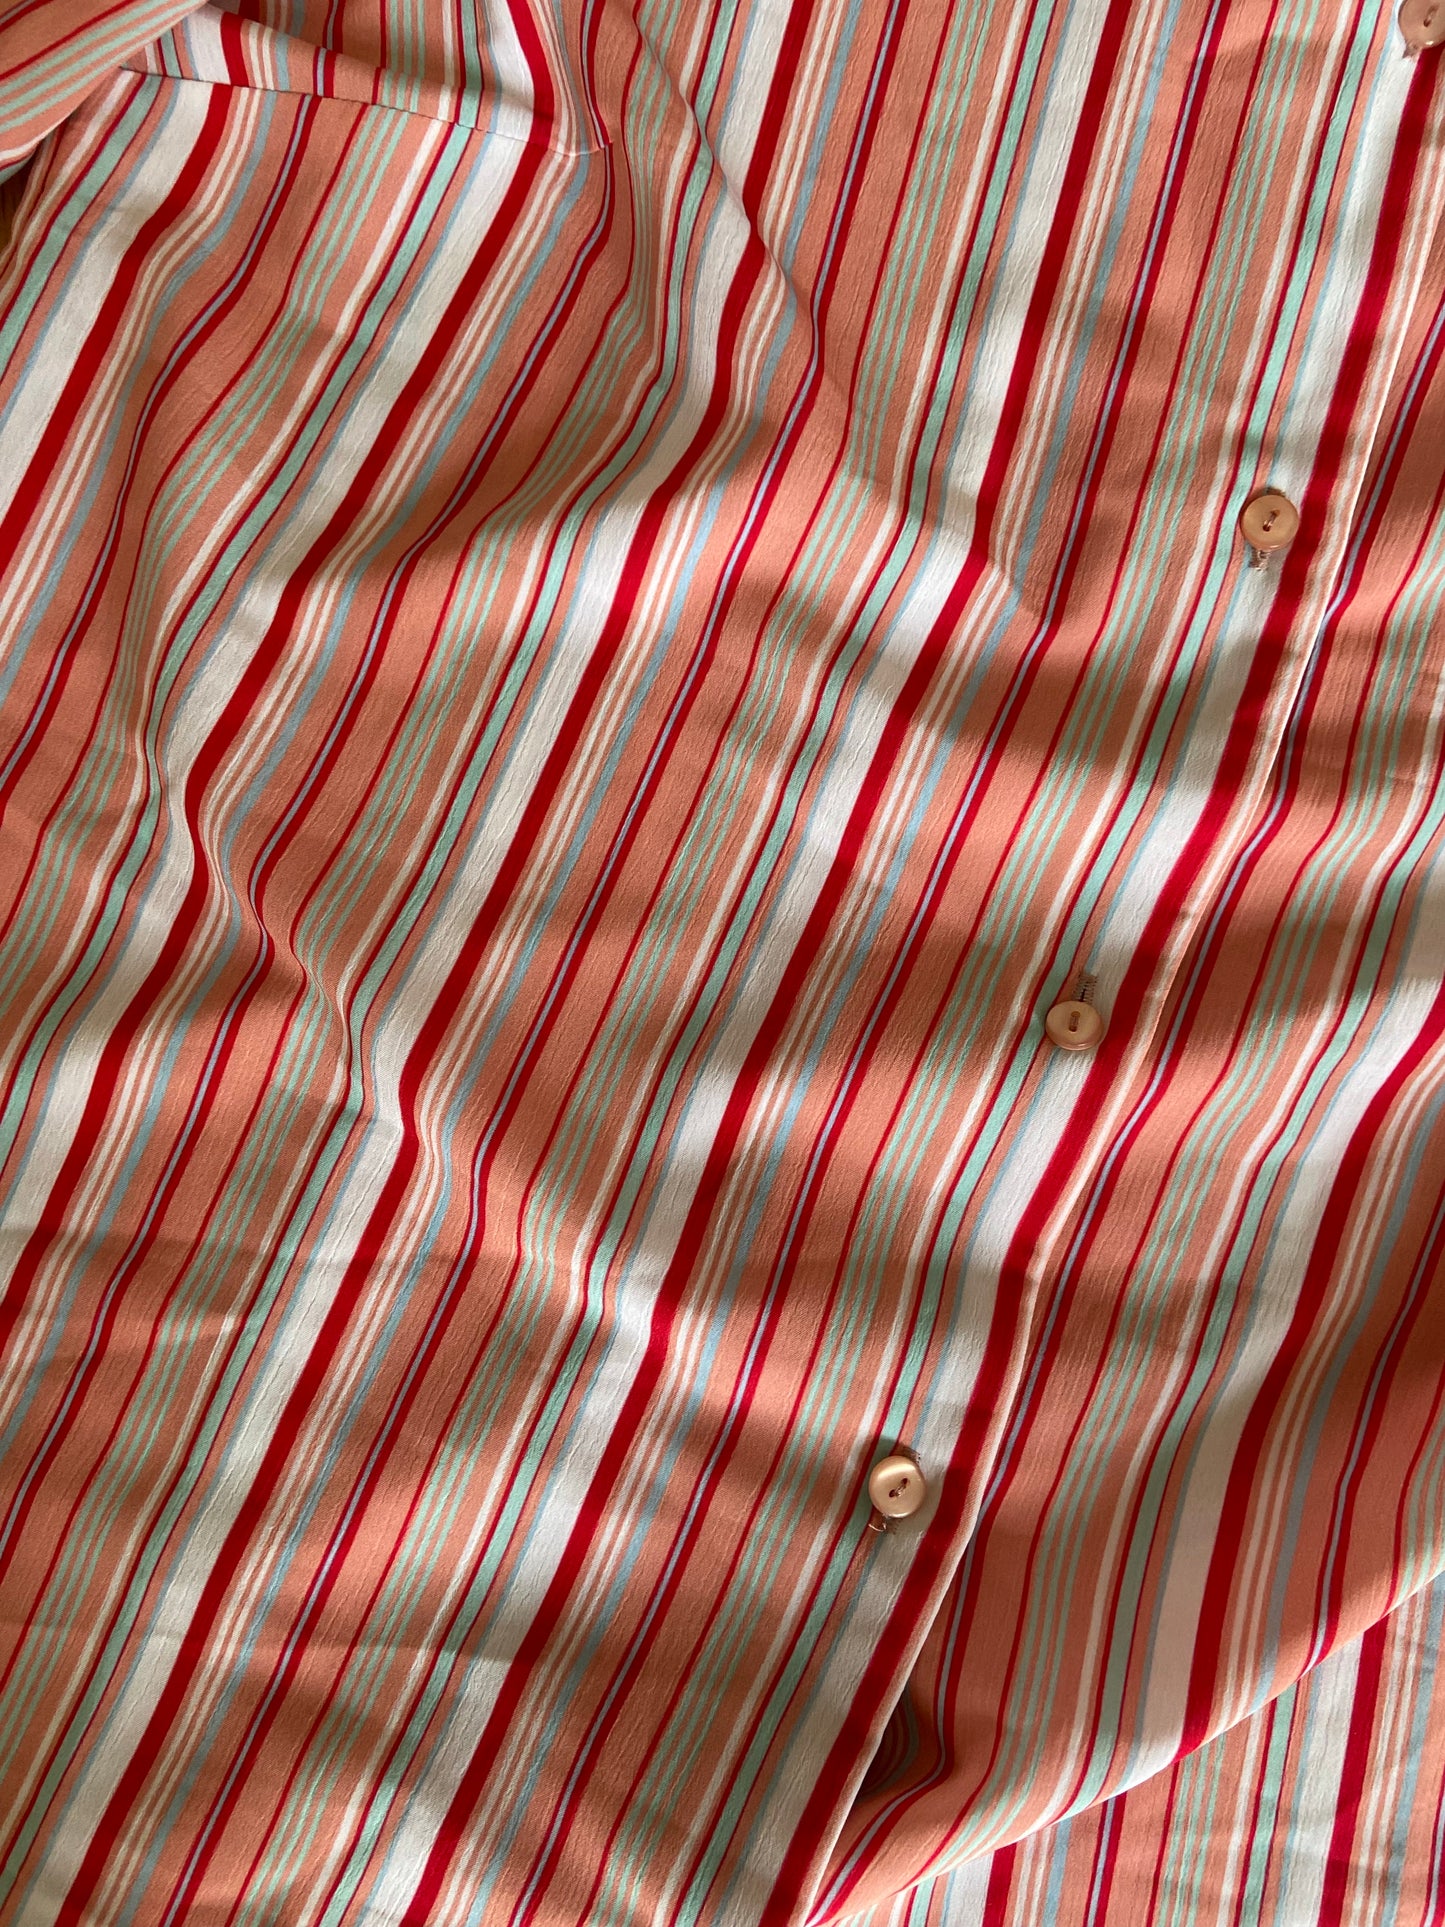 Pink striped shirt